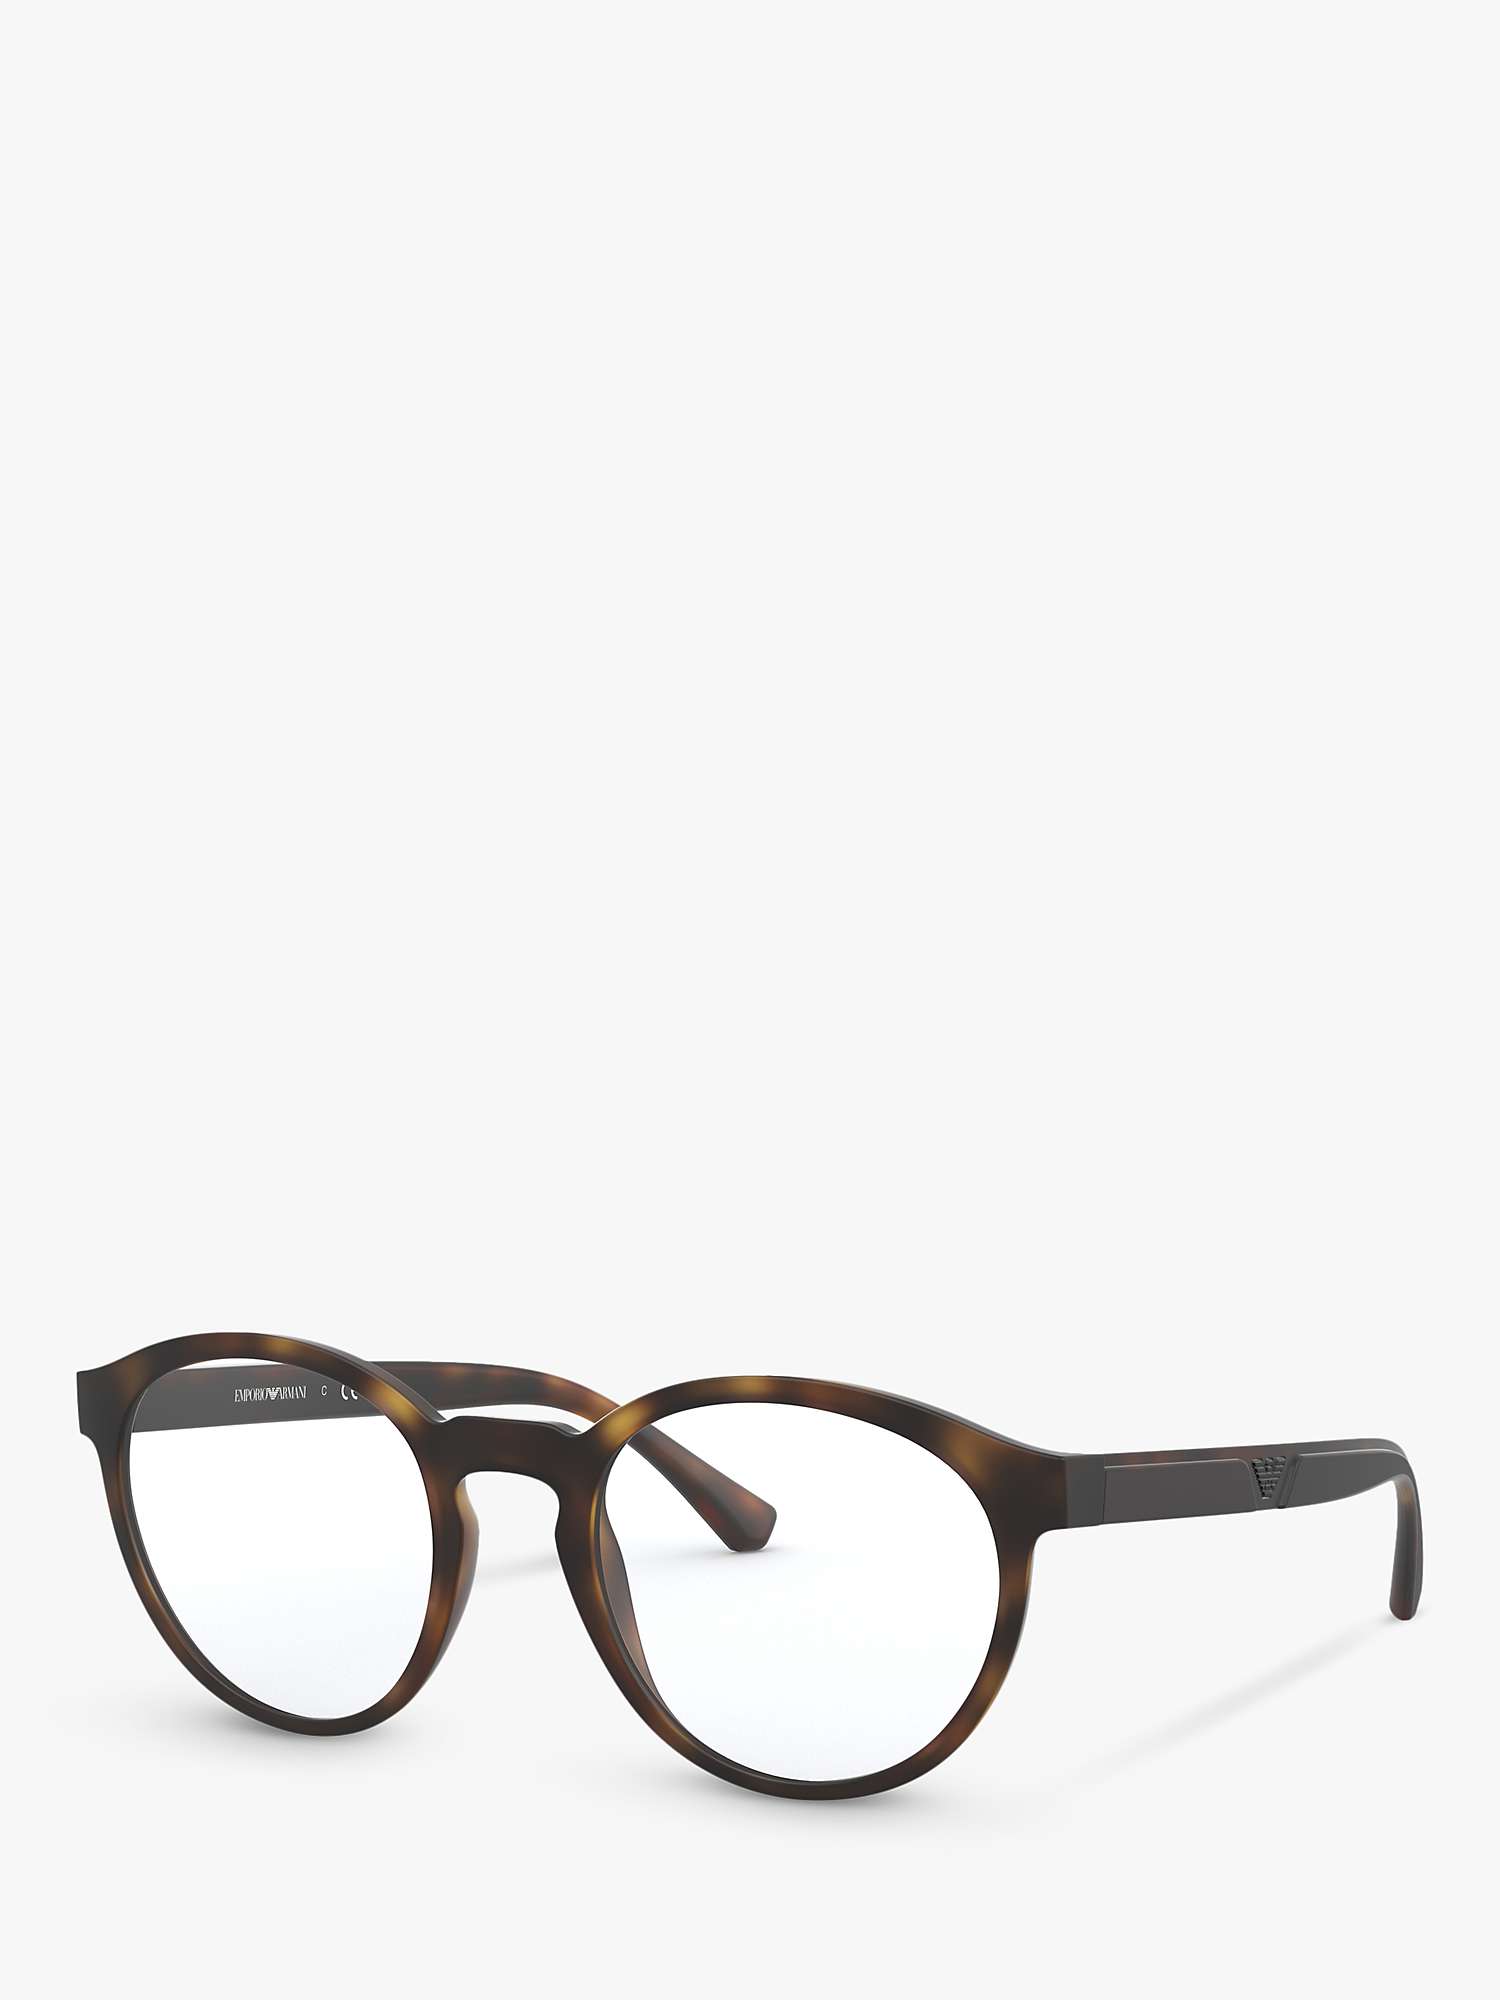 Buy Emporio Armani EA4152 Men's Oval Sunglasses Online at johnlewis.com